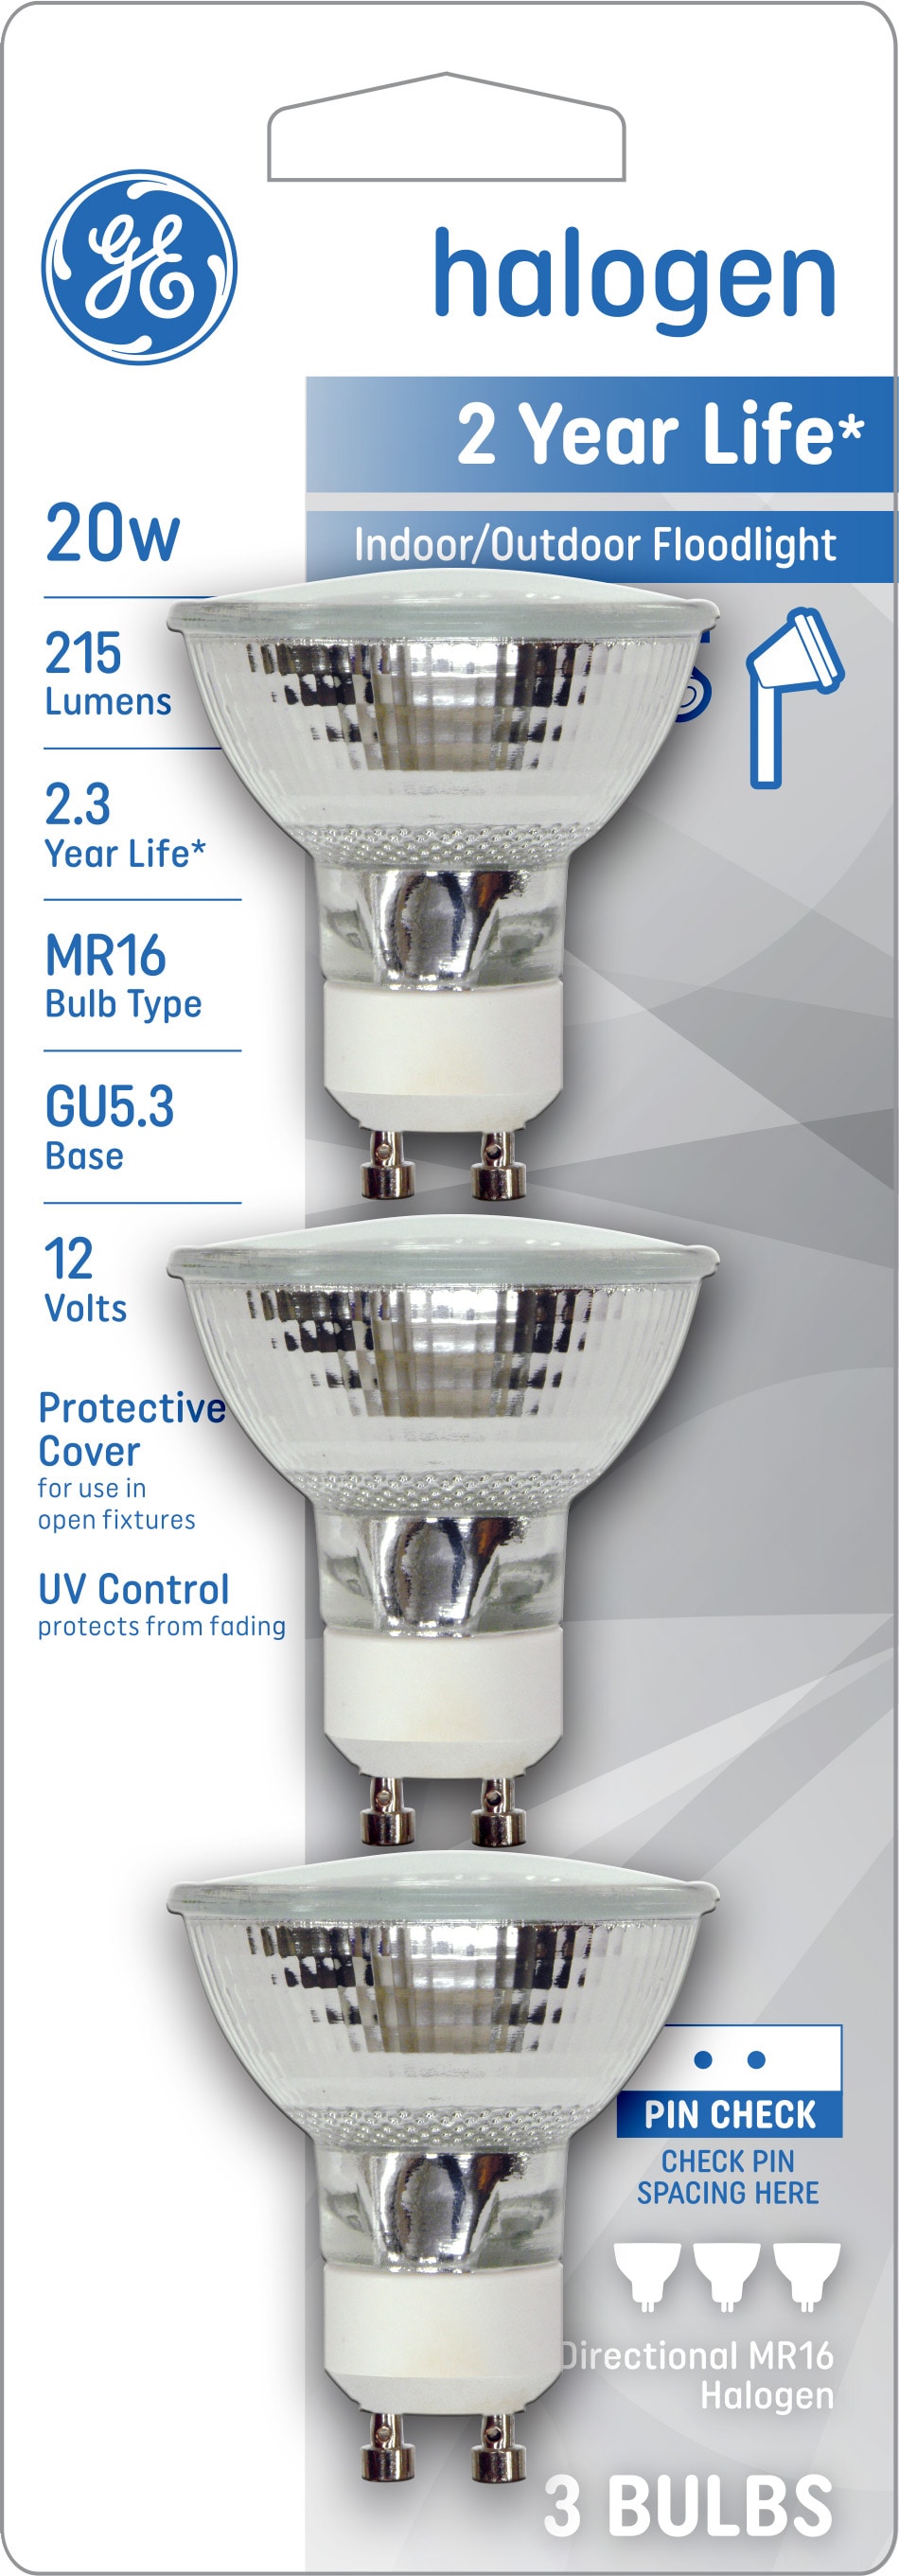 GE Classic 50-Watt EQ MR16 Warm White Gu5.3 Dimmable LED Light Bulb  (3-Pack) in the Spot & Flood Light Bulbs department at